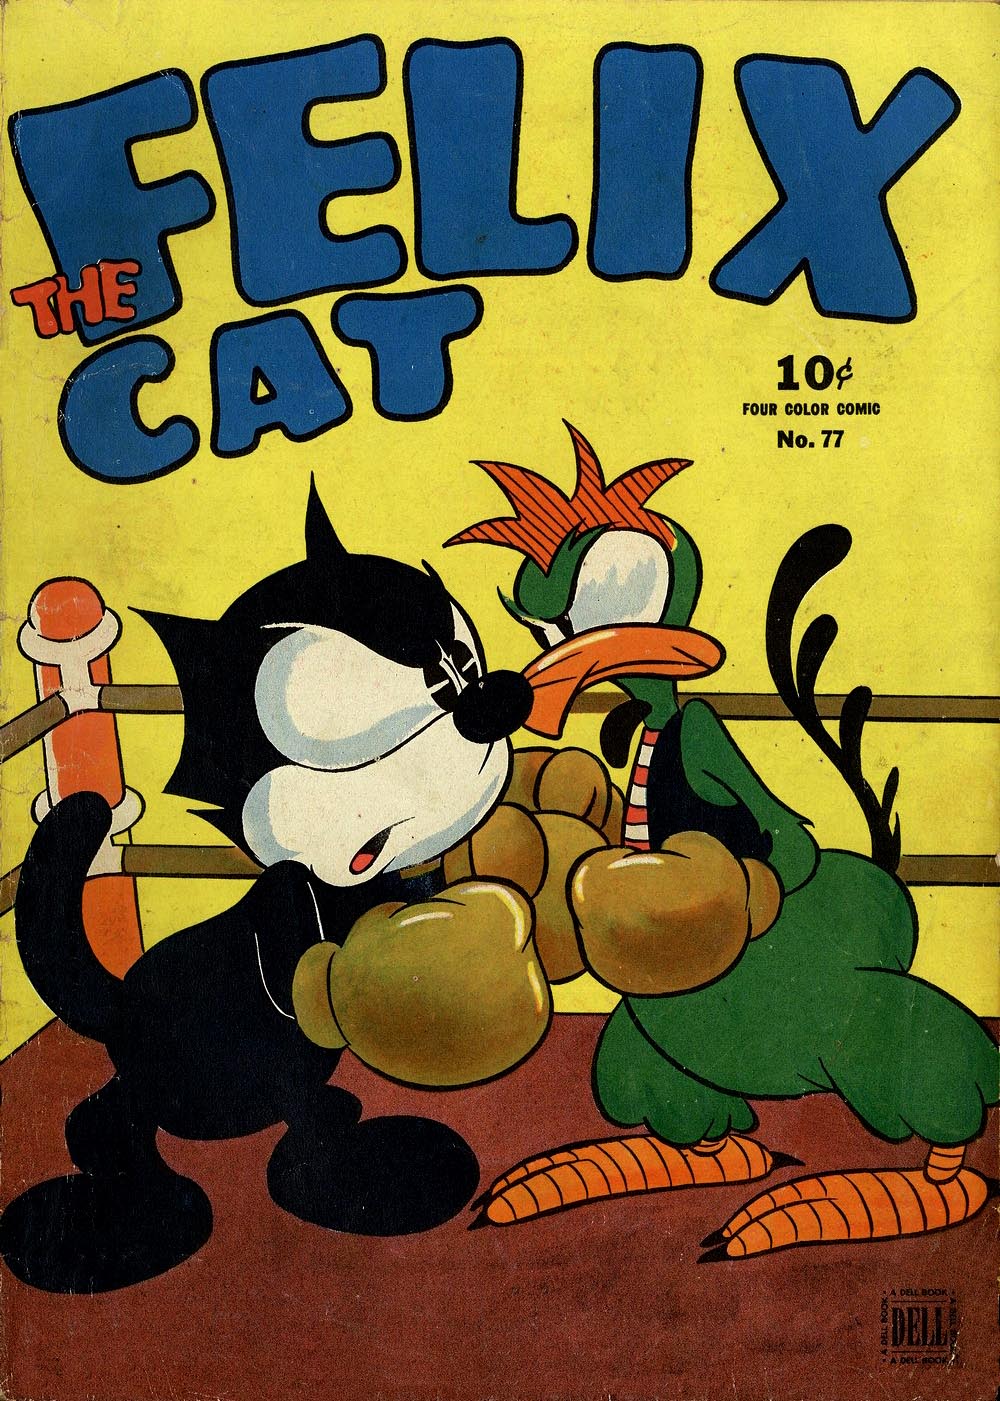 Inbetweens: Felix the Cat Comic Book Covers - AnimationResources.org